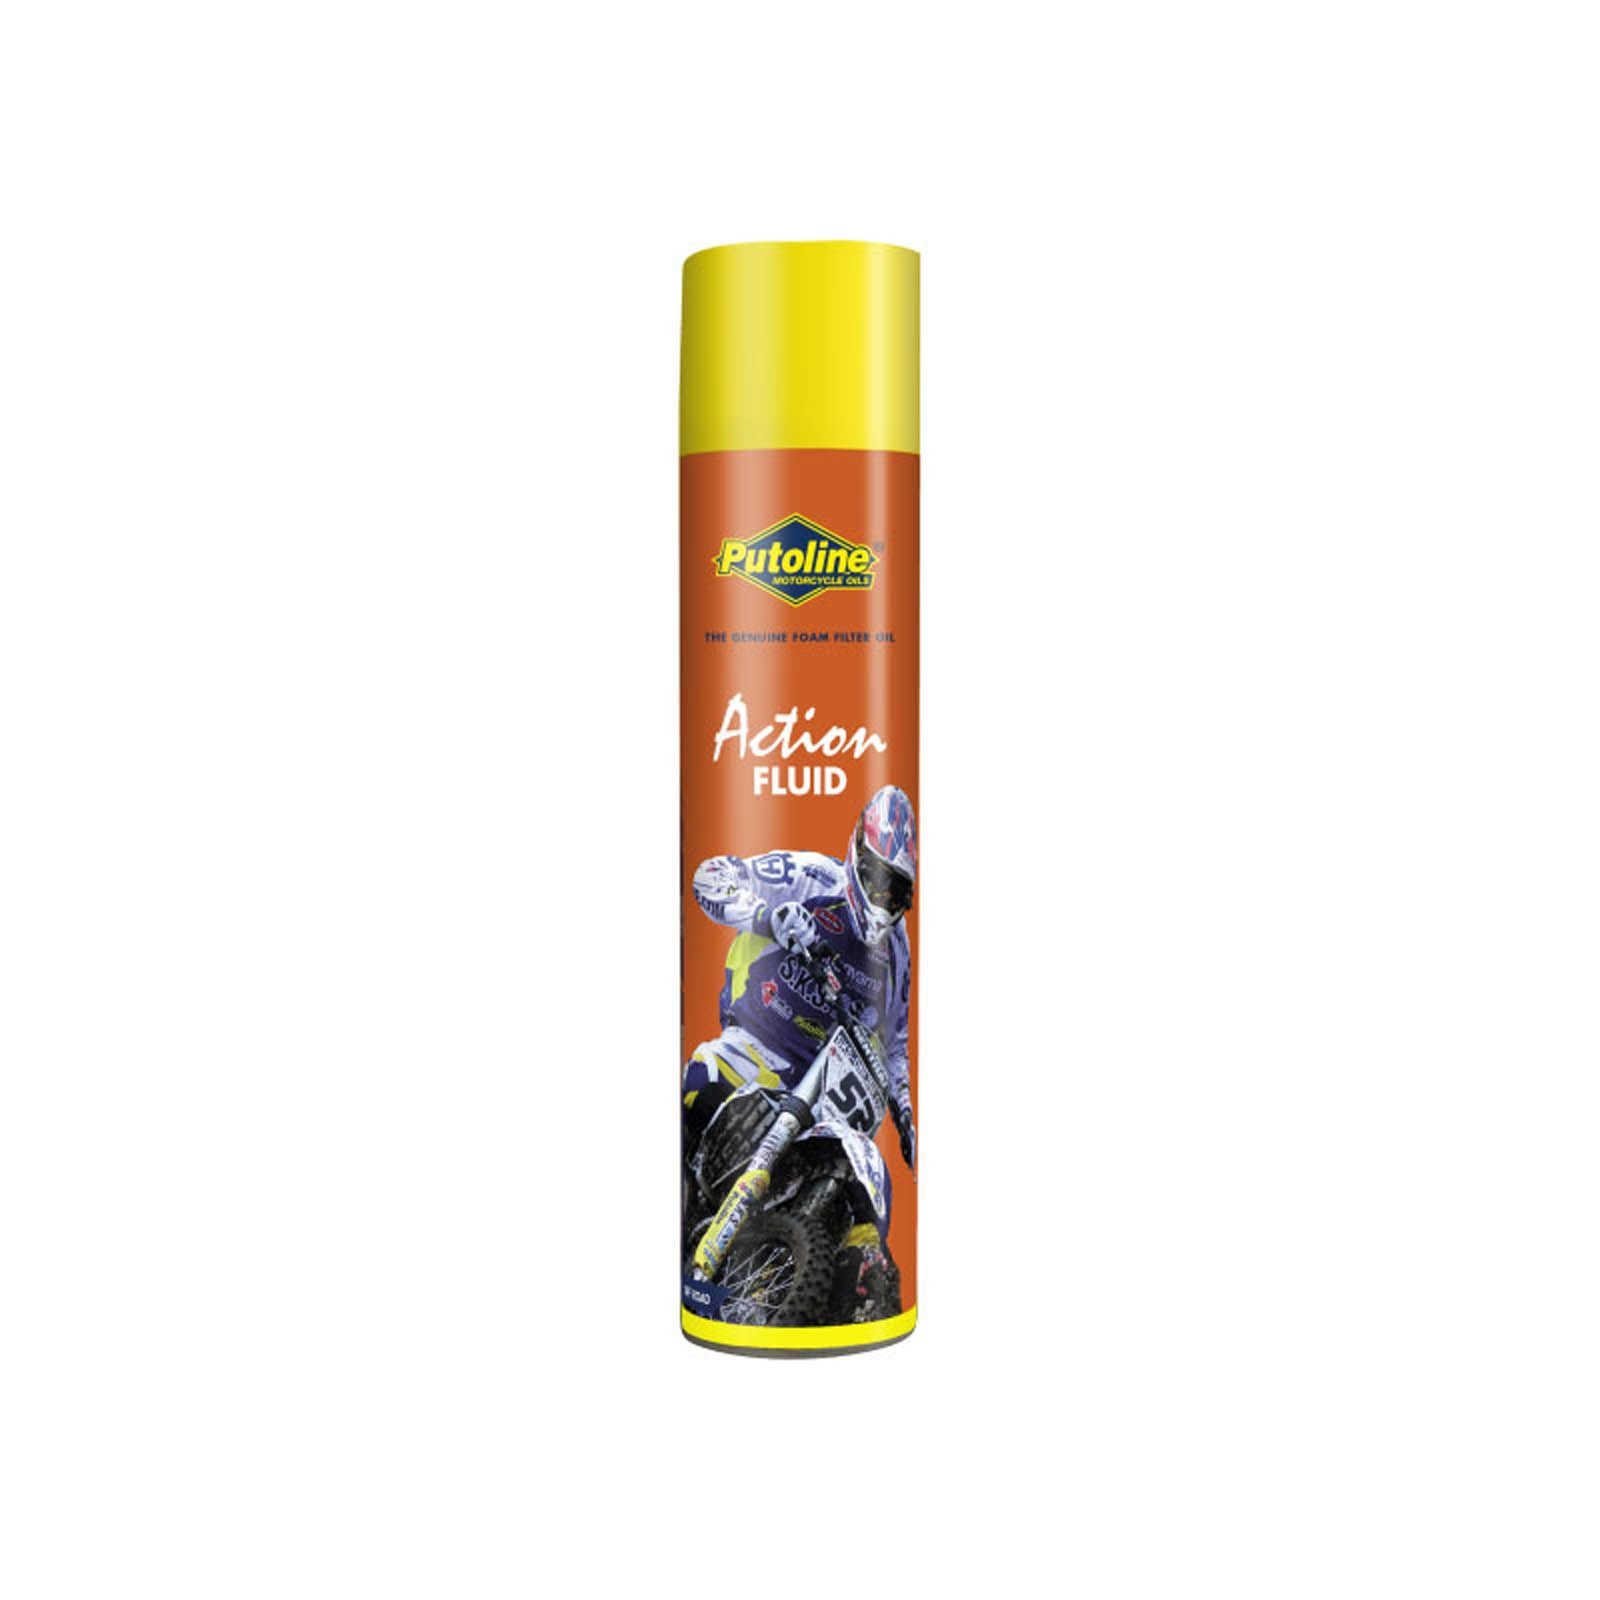 New PUTOLINE Action Air Filter Oil Spray - 600ml #PTAAFS600